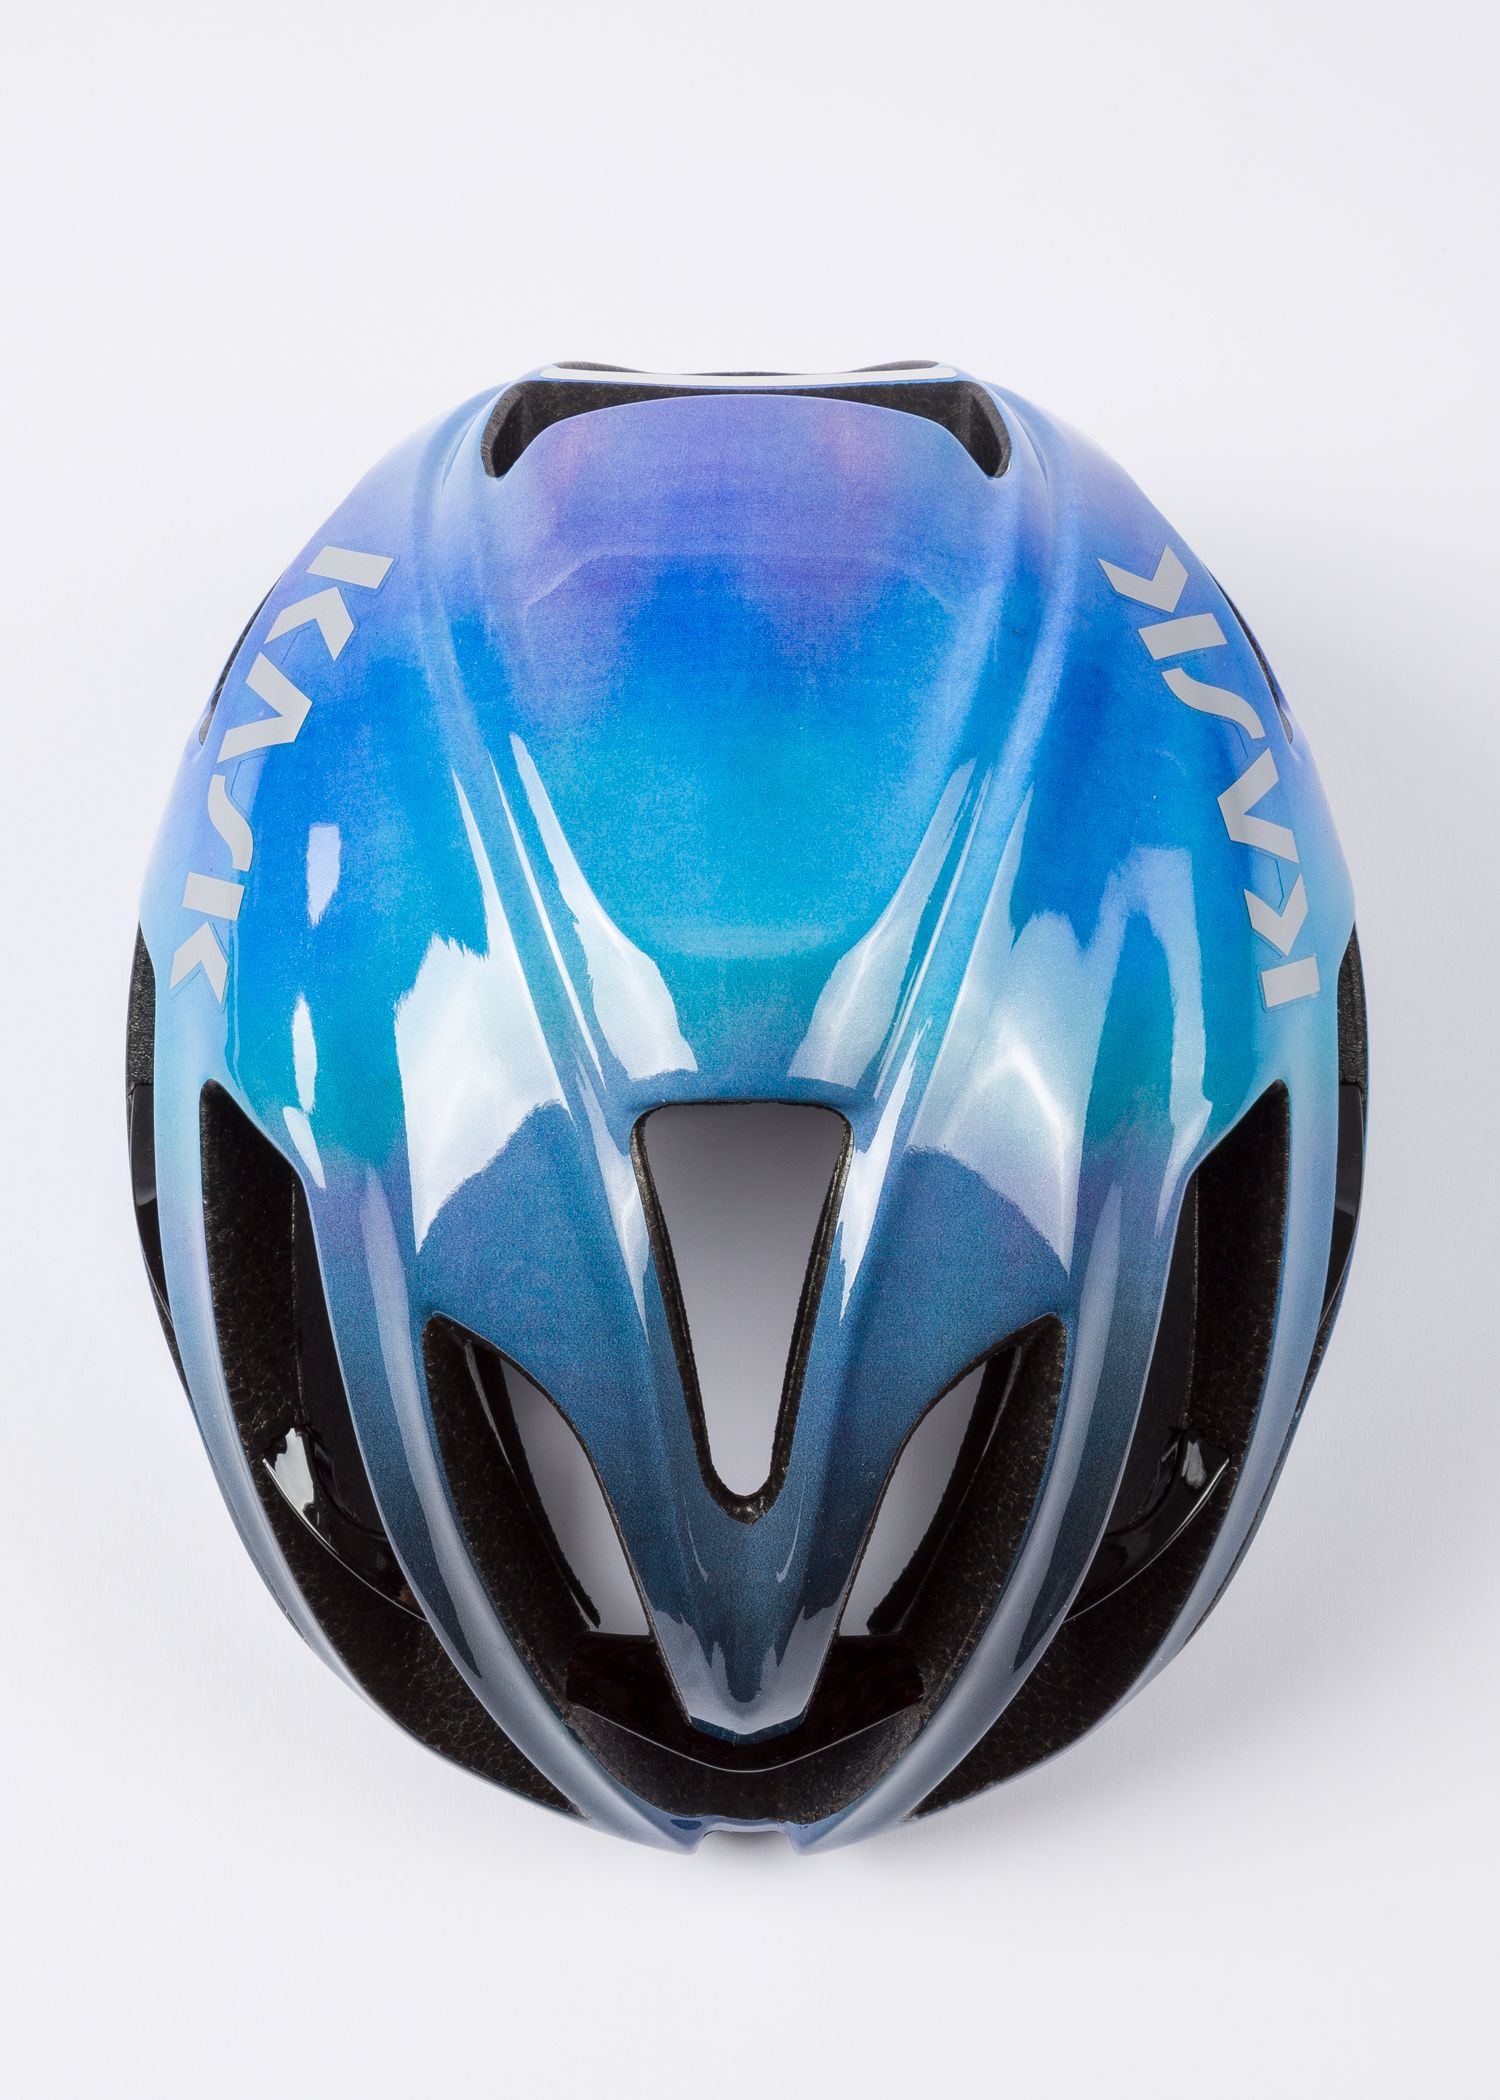 Paul Smith + Kask 'Blue Gradient' Protone Cycling Helmet - Paul Smith